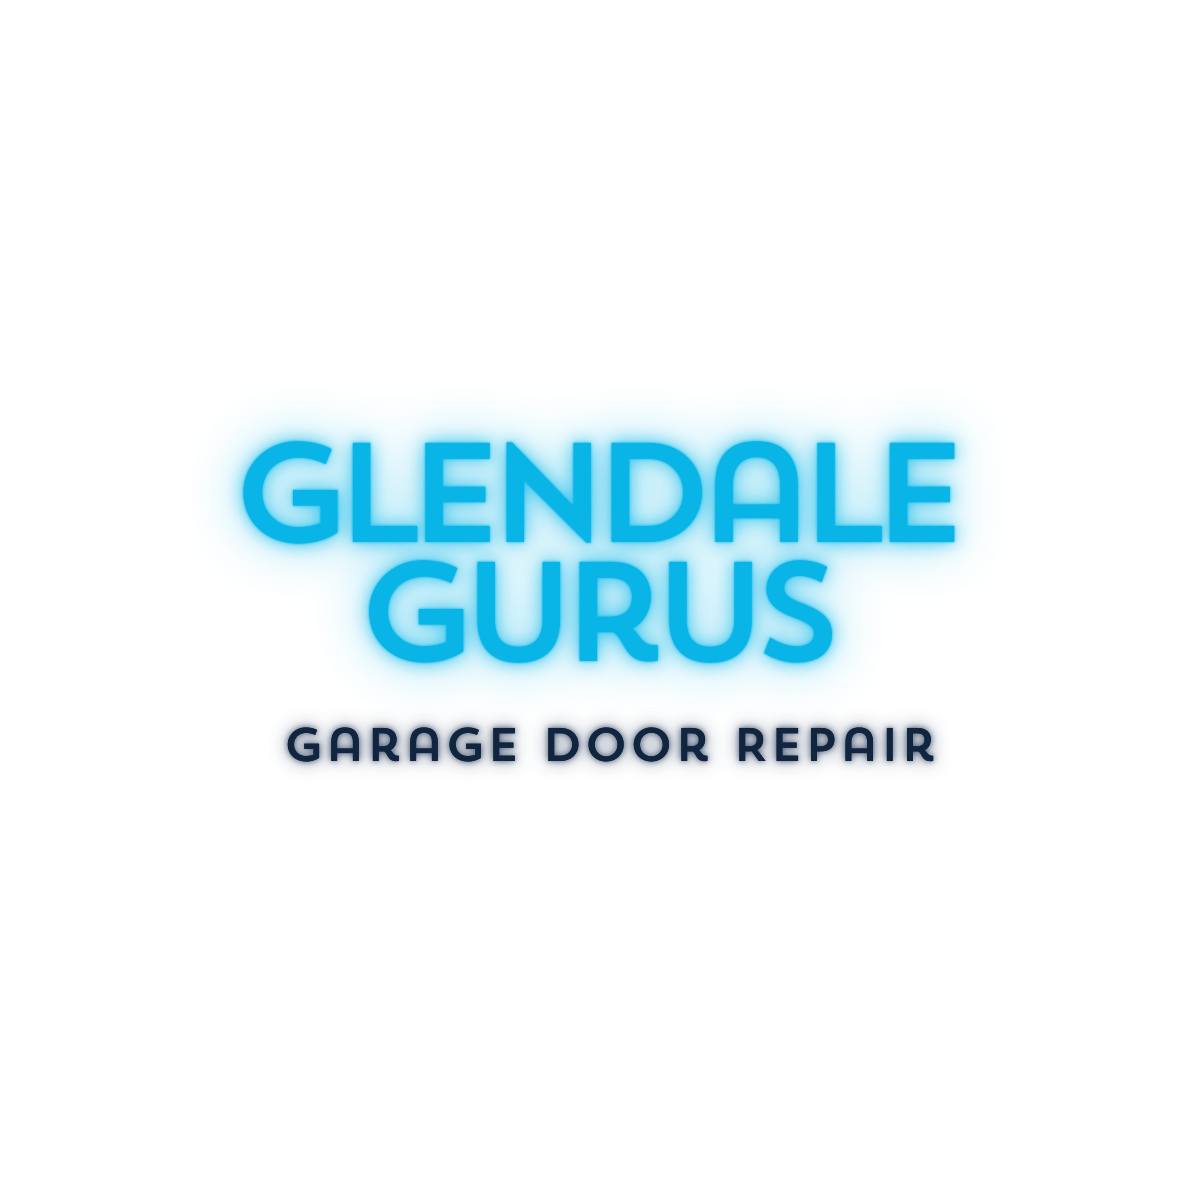 Glendale Gurus Garage Door Repair